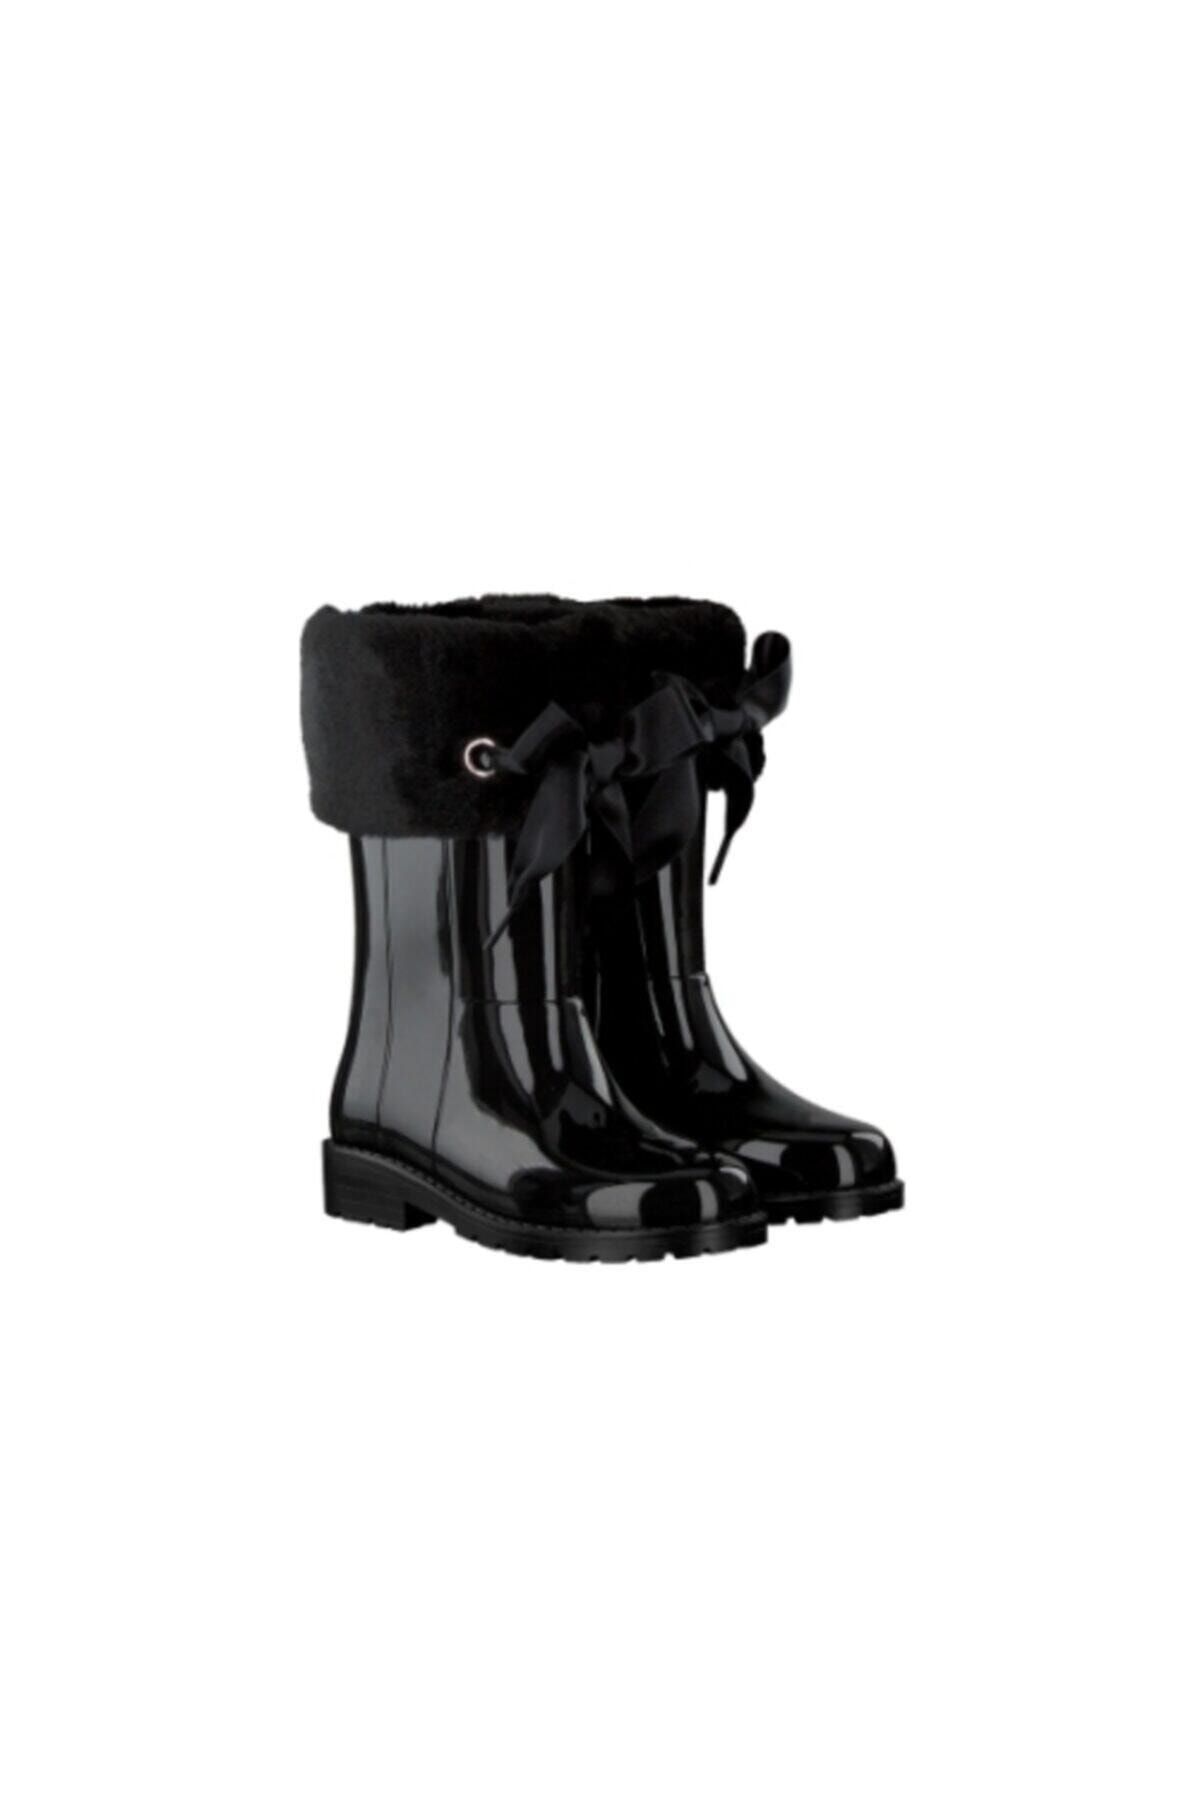 IGOR W10239 Campera Charol Soft Çocuk Siyah Yağmur Çizmesi